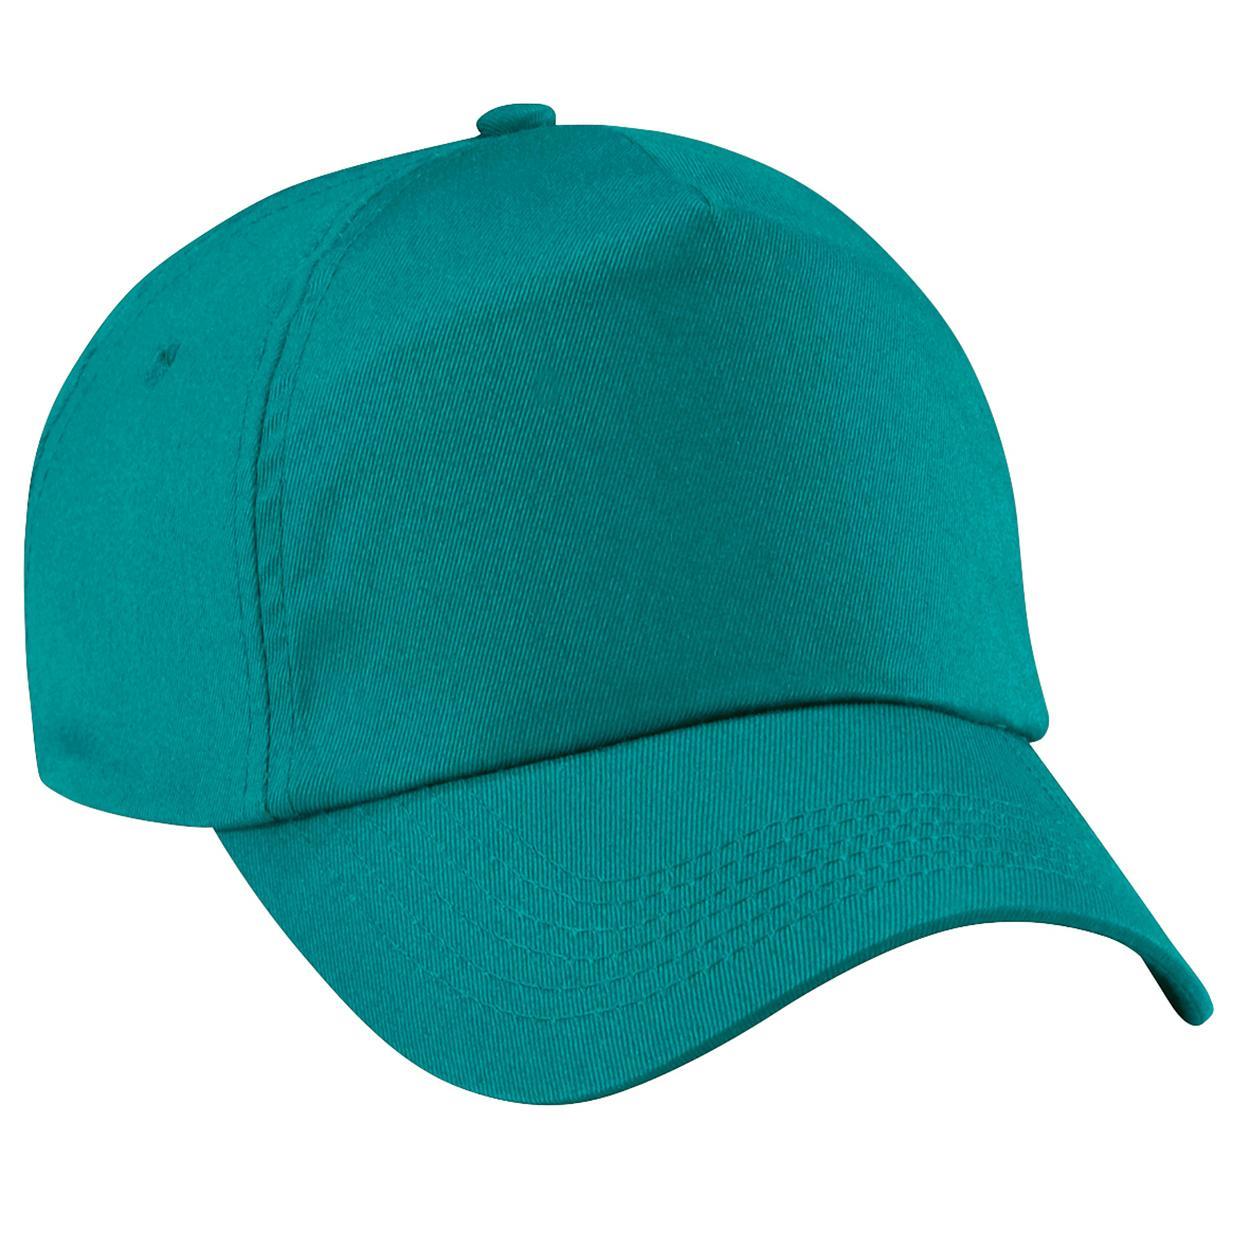 Beechfield Unisex Plain Original 5 Panel Baseball Cap (Emerald) (One Size)